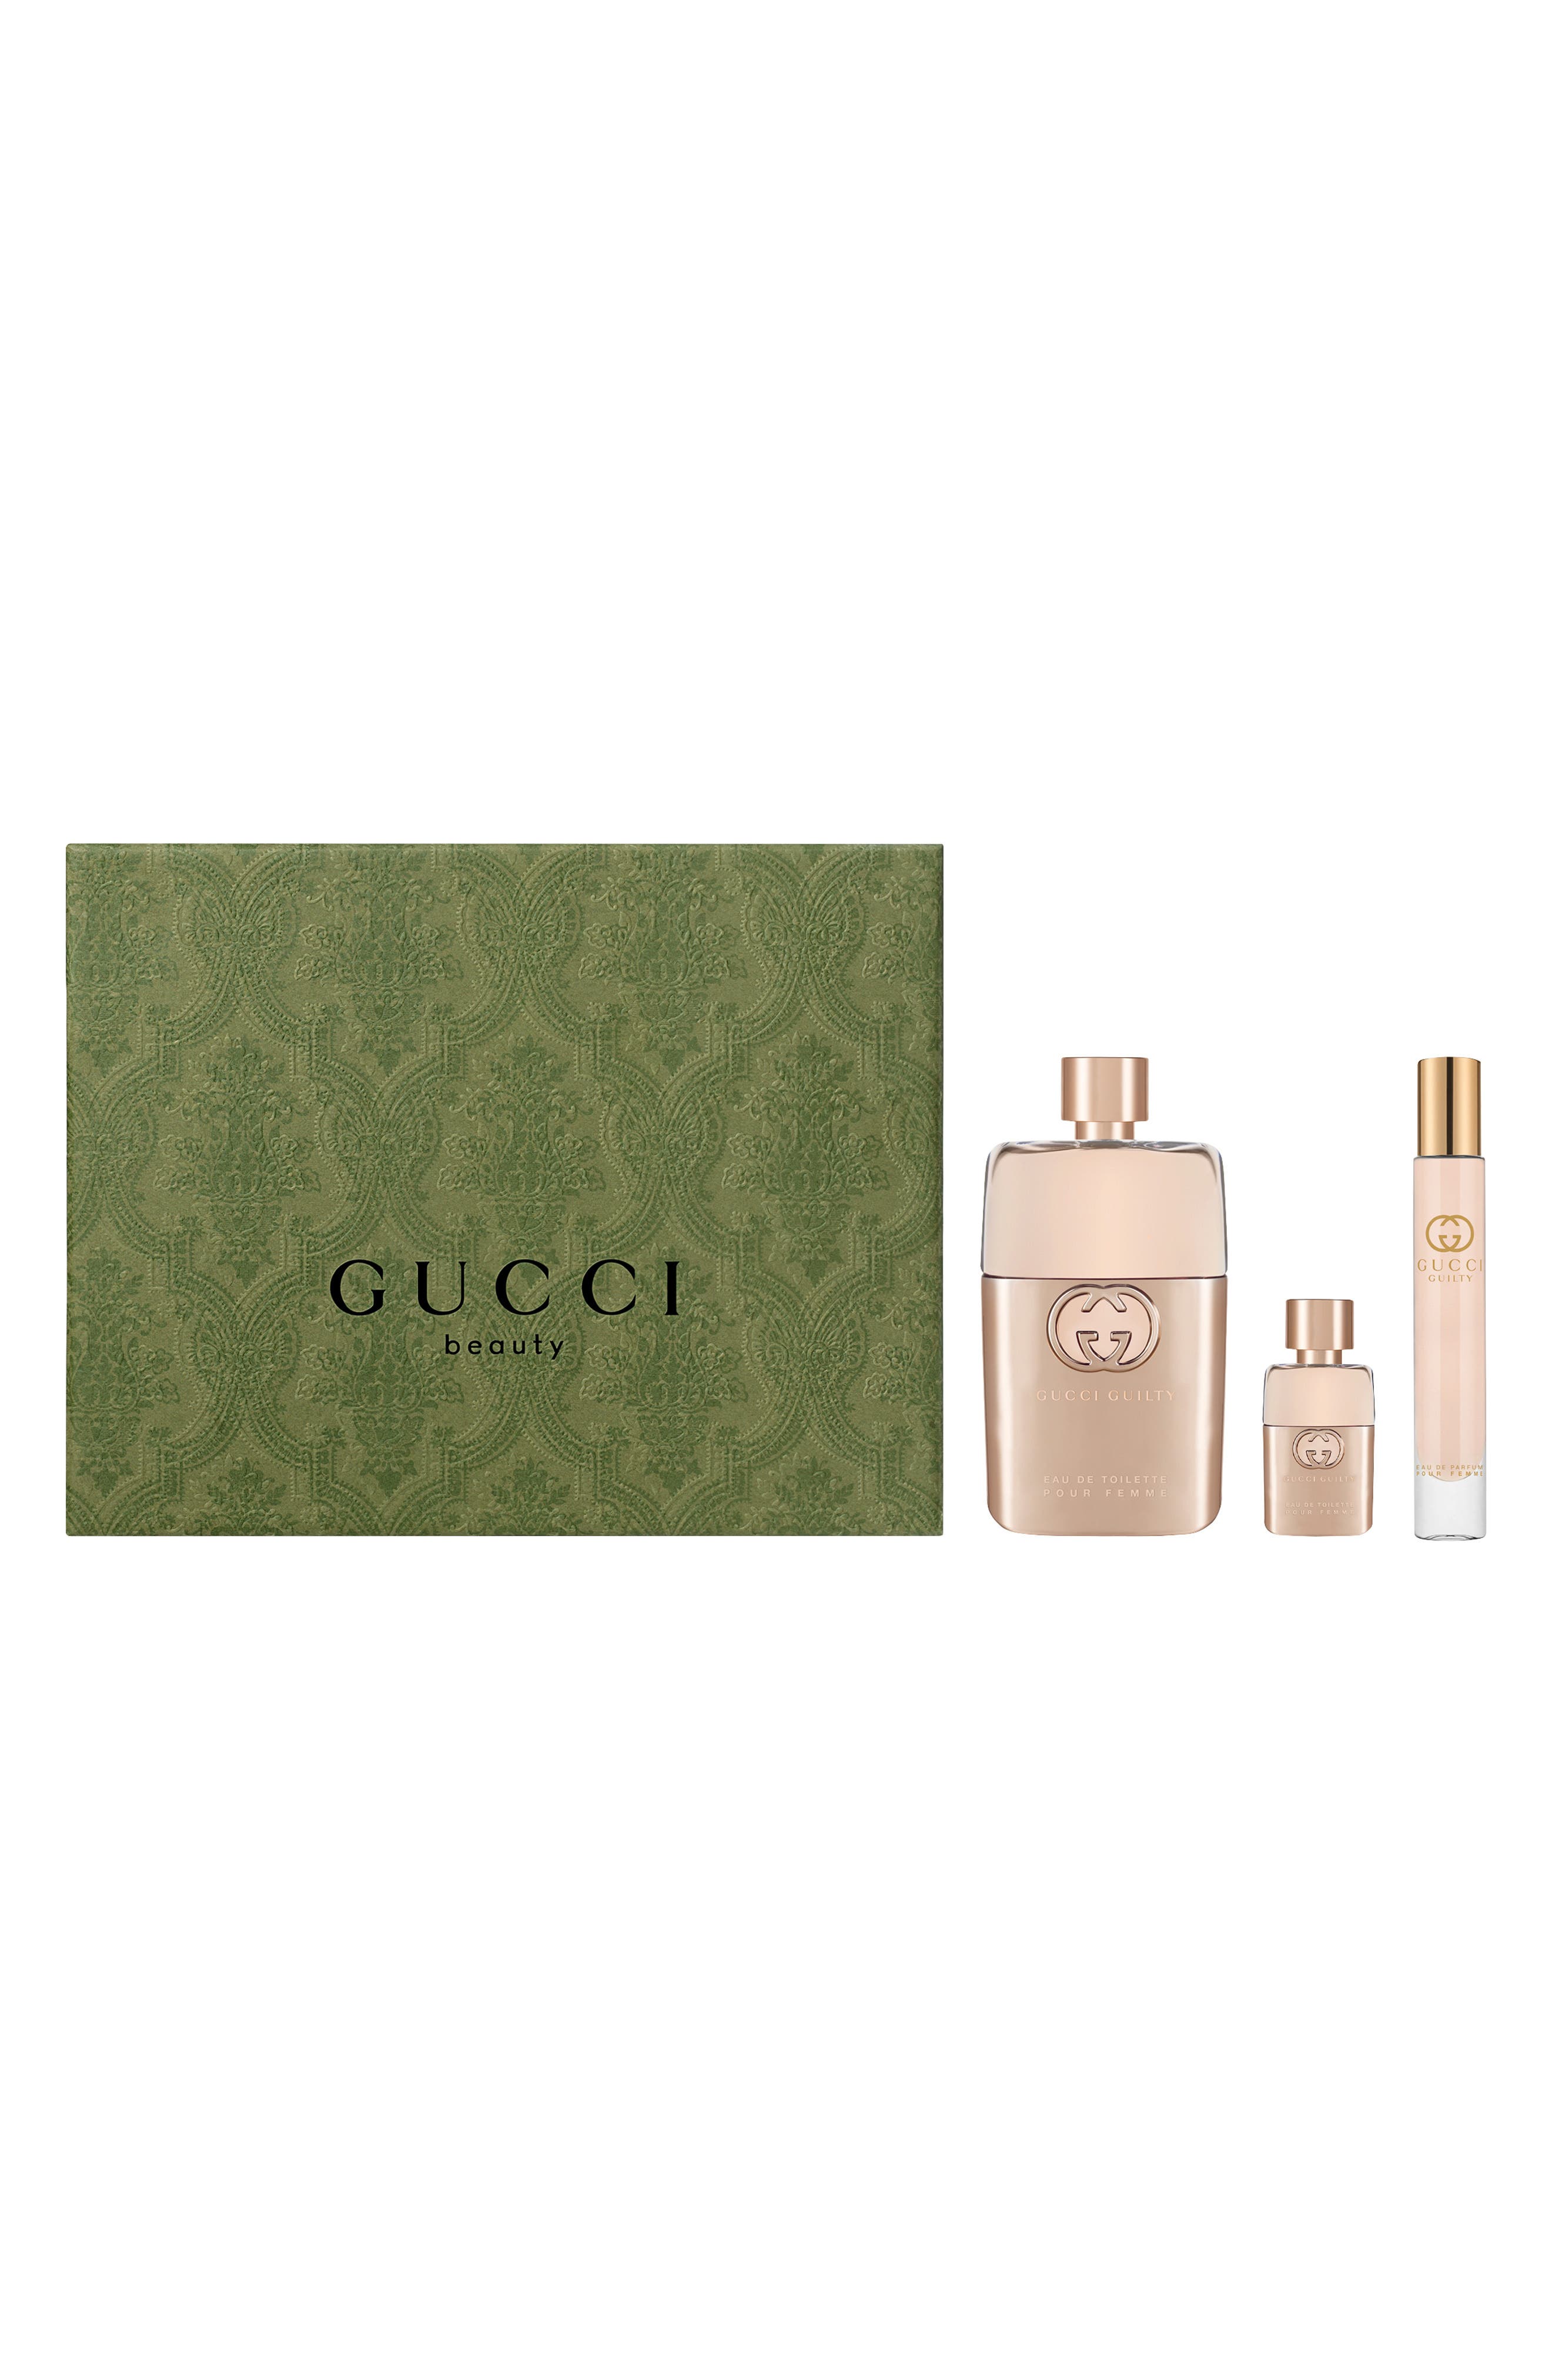 Perfume Sets Gucci Fragrance | Nordstrom